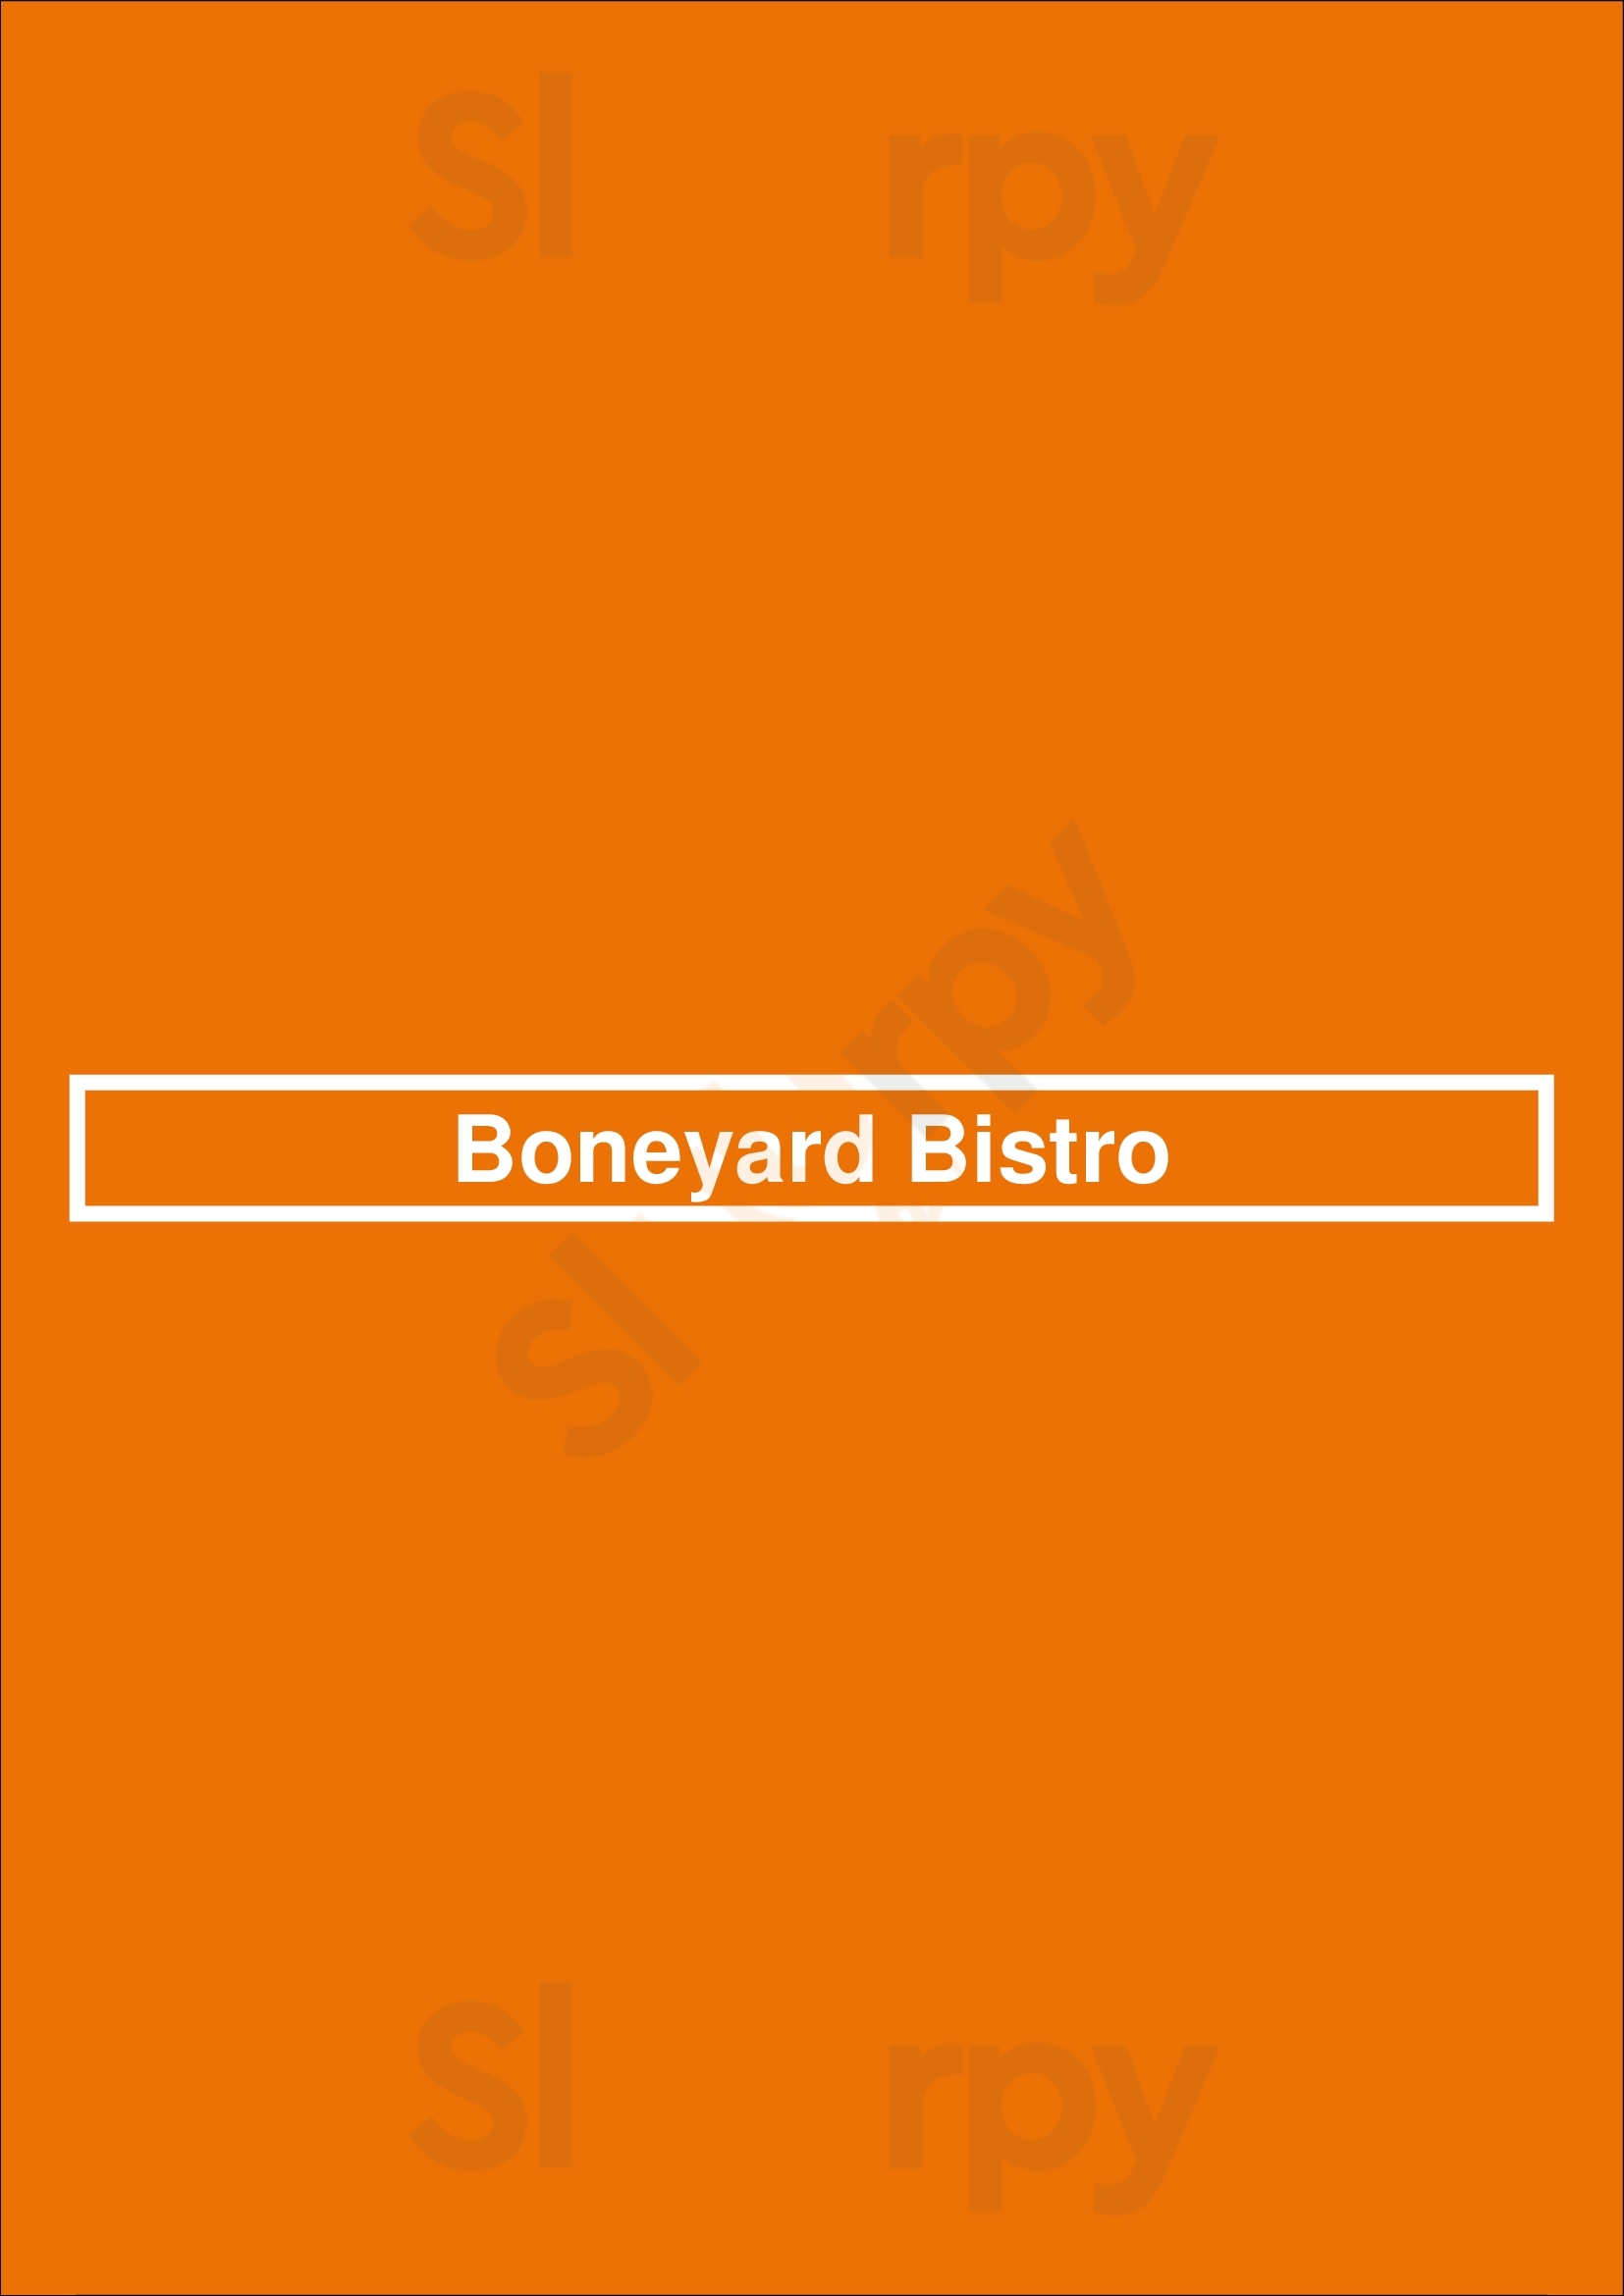 Boneyard Bistro Los Angeles Menu - 1